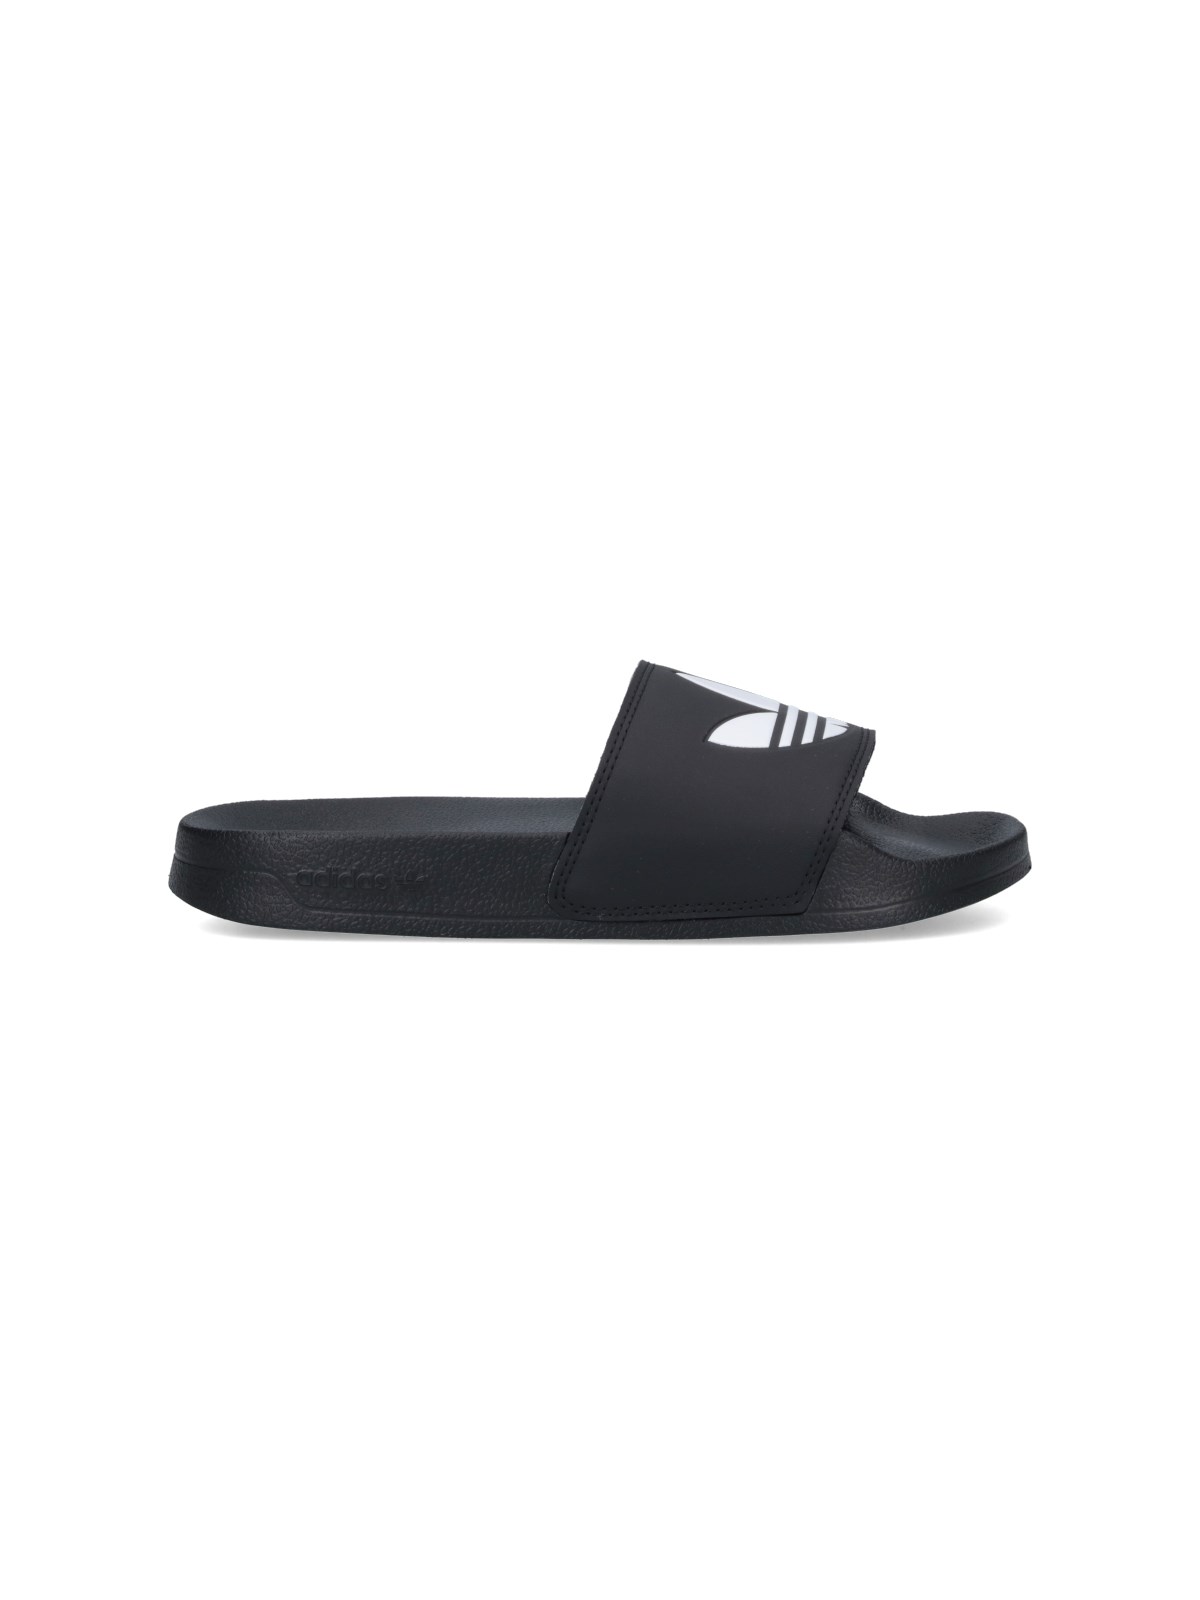 Adidas Originals Logo Slide Sandals In Black  